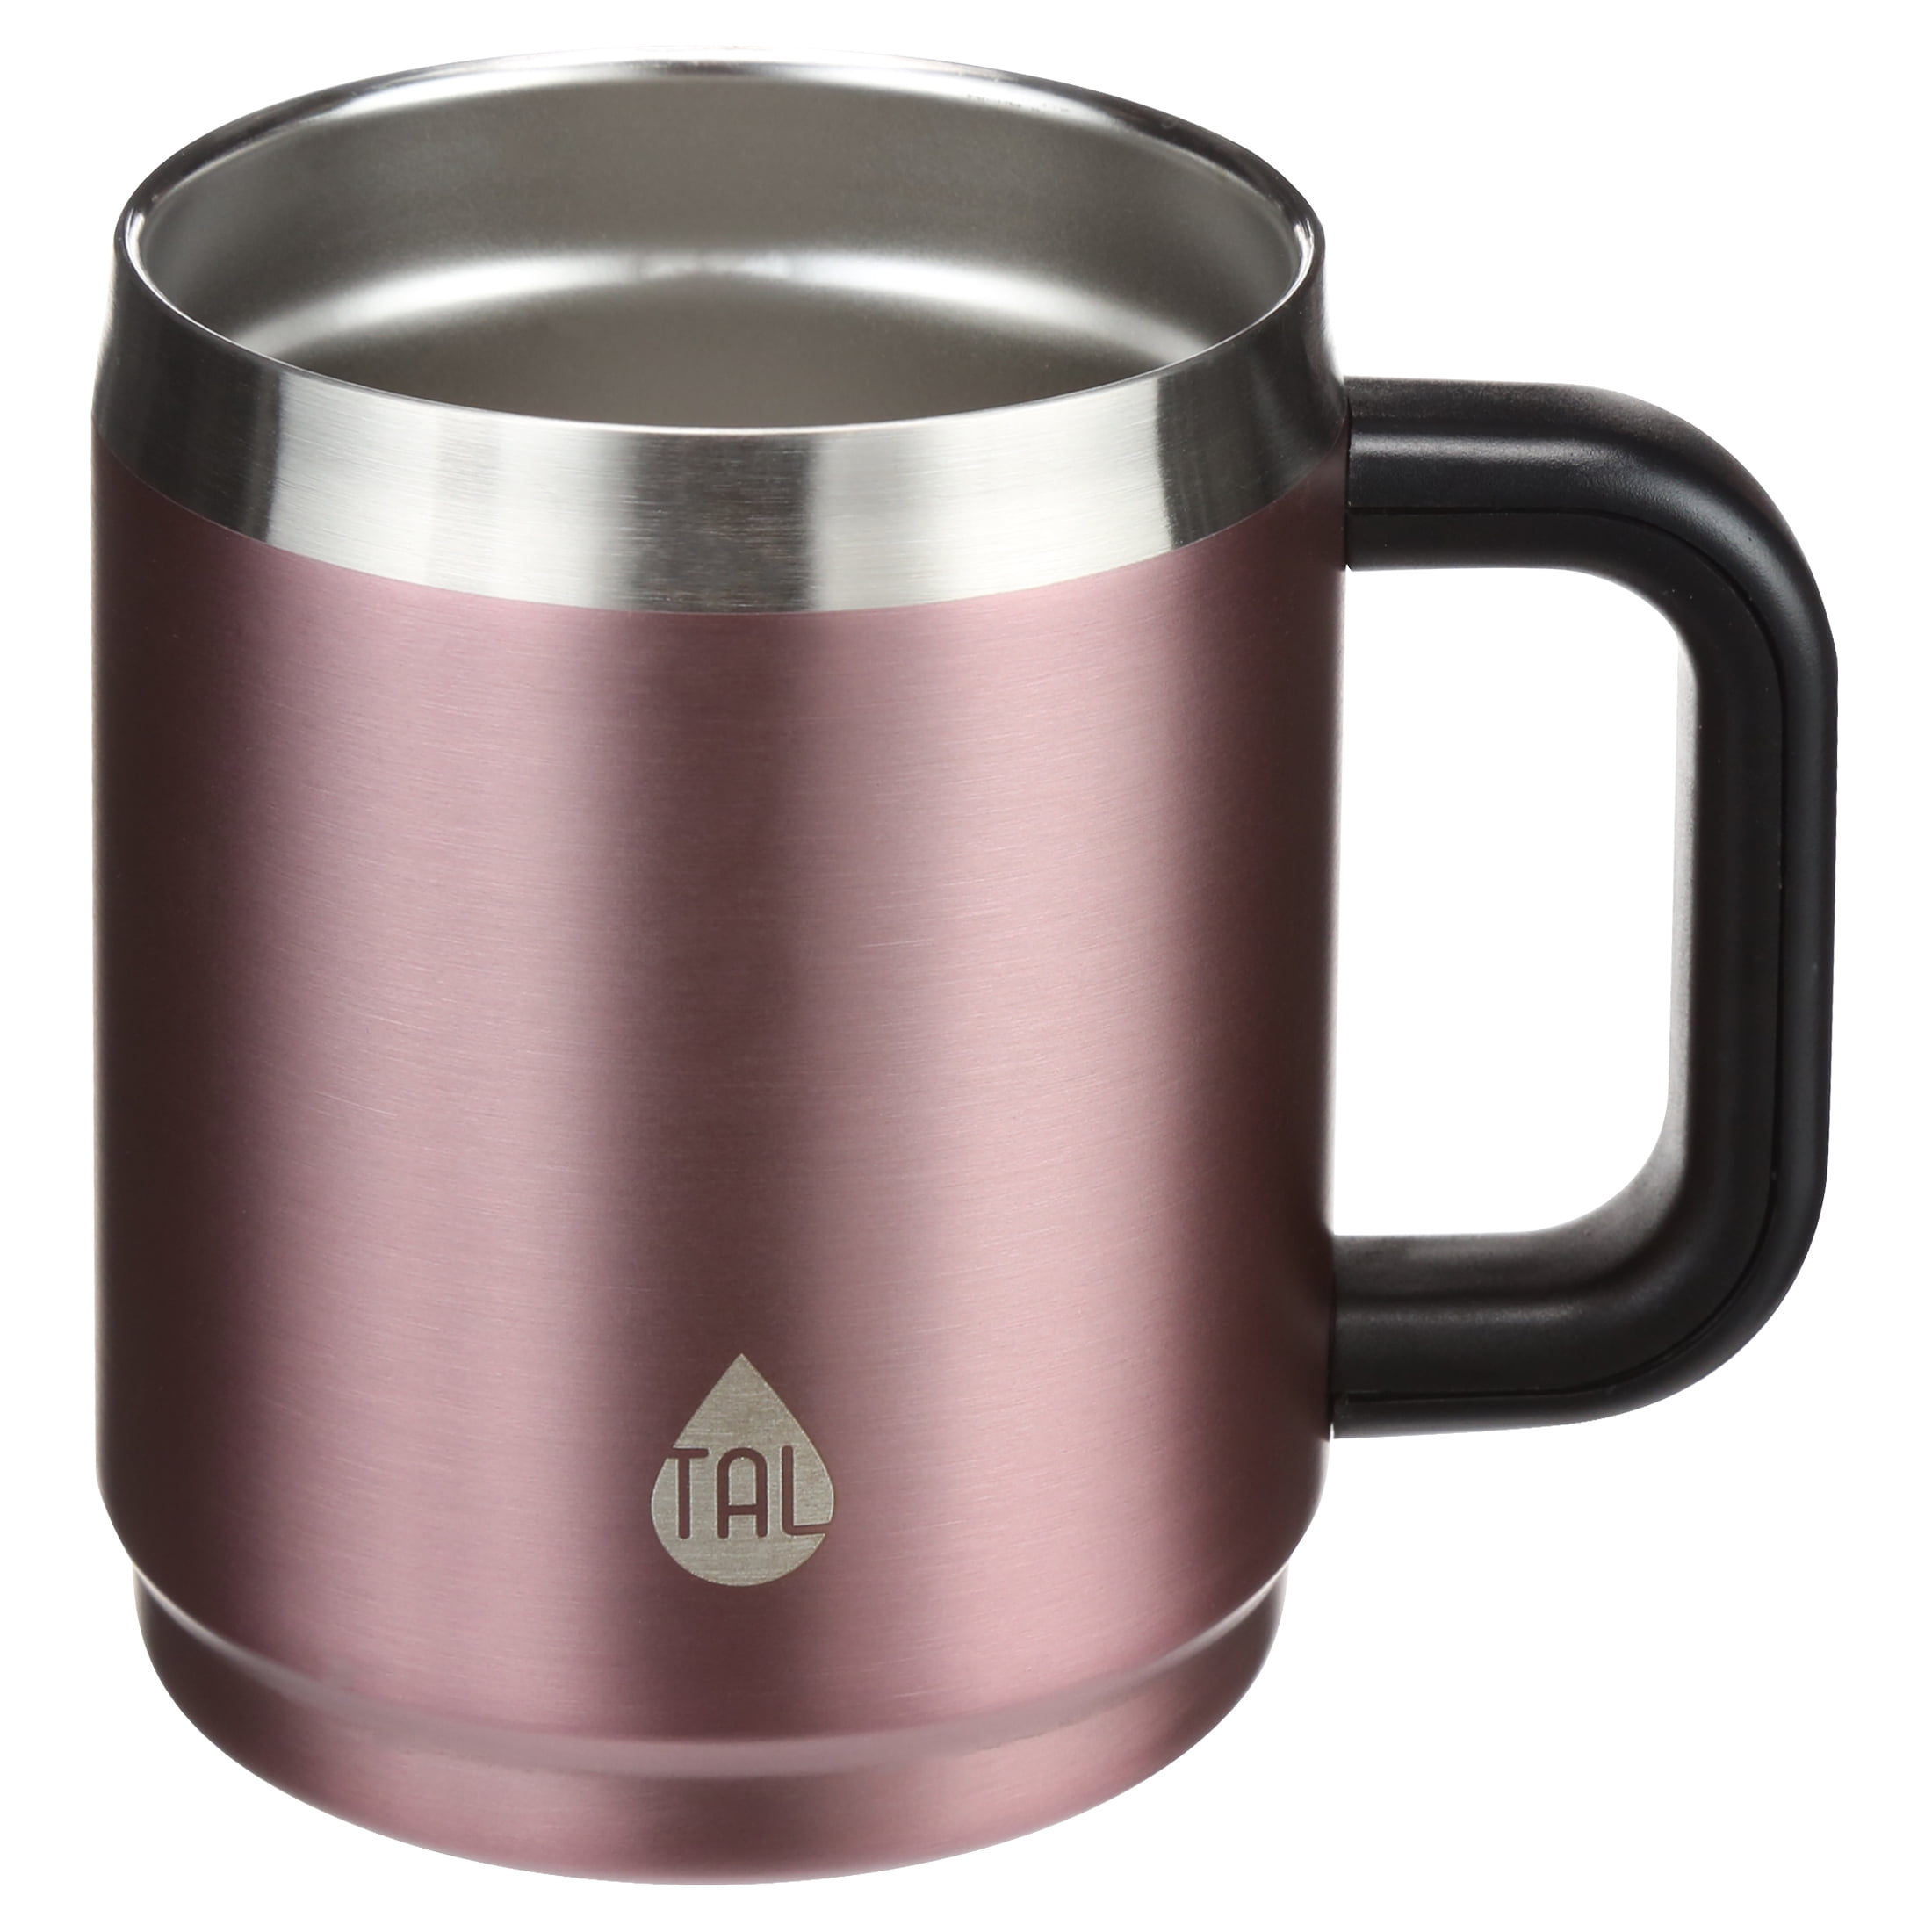 Tal Stainless Steel Boulder Coffee Mug 14oz, Bright Pink